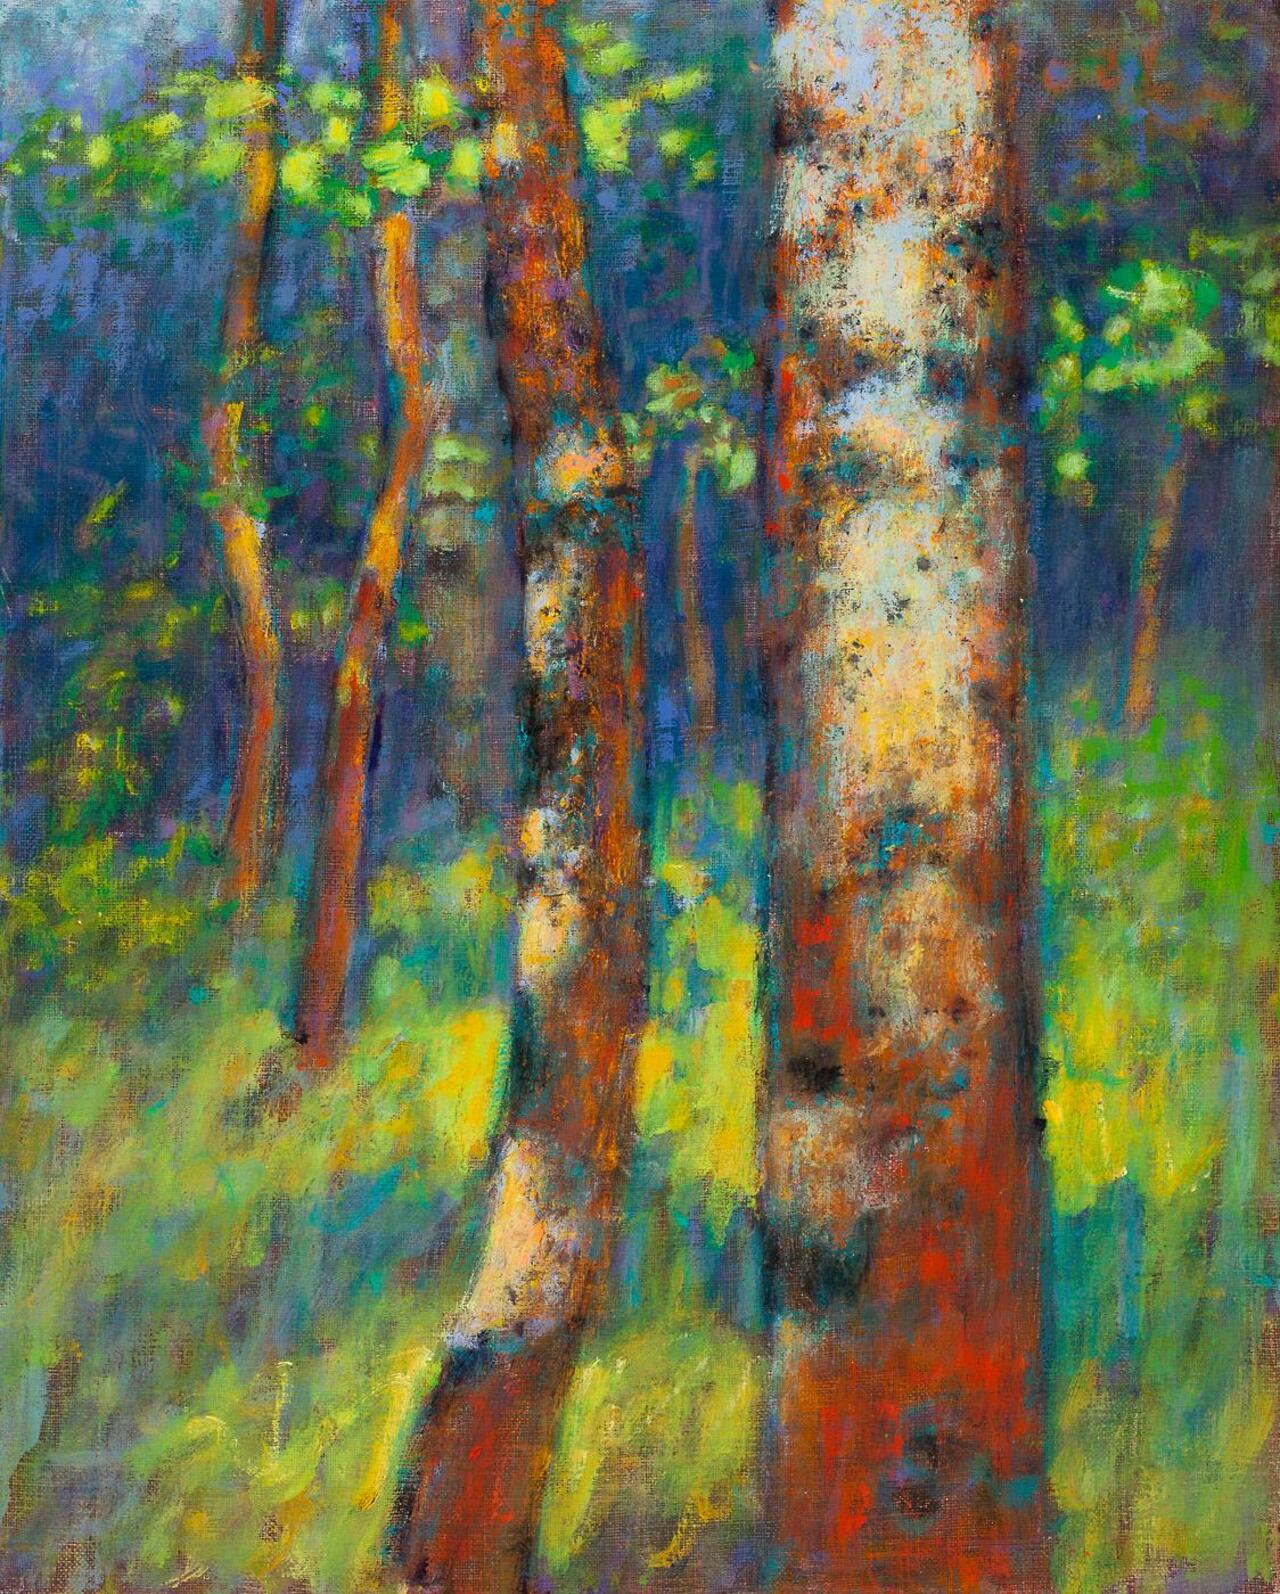 High Mountain Aspens | oil on linen | 15 x 12" | 2014 #art #pleinair #nature #painting | http://bit.ly/1GHHIHL http://t.co/E7uZTDQncE